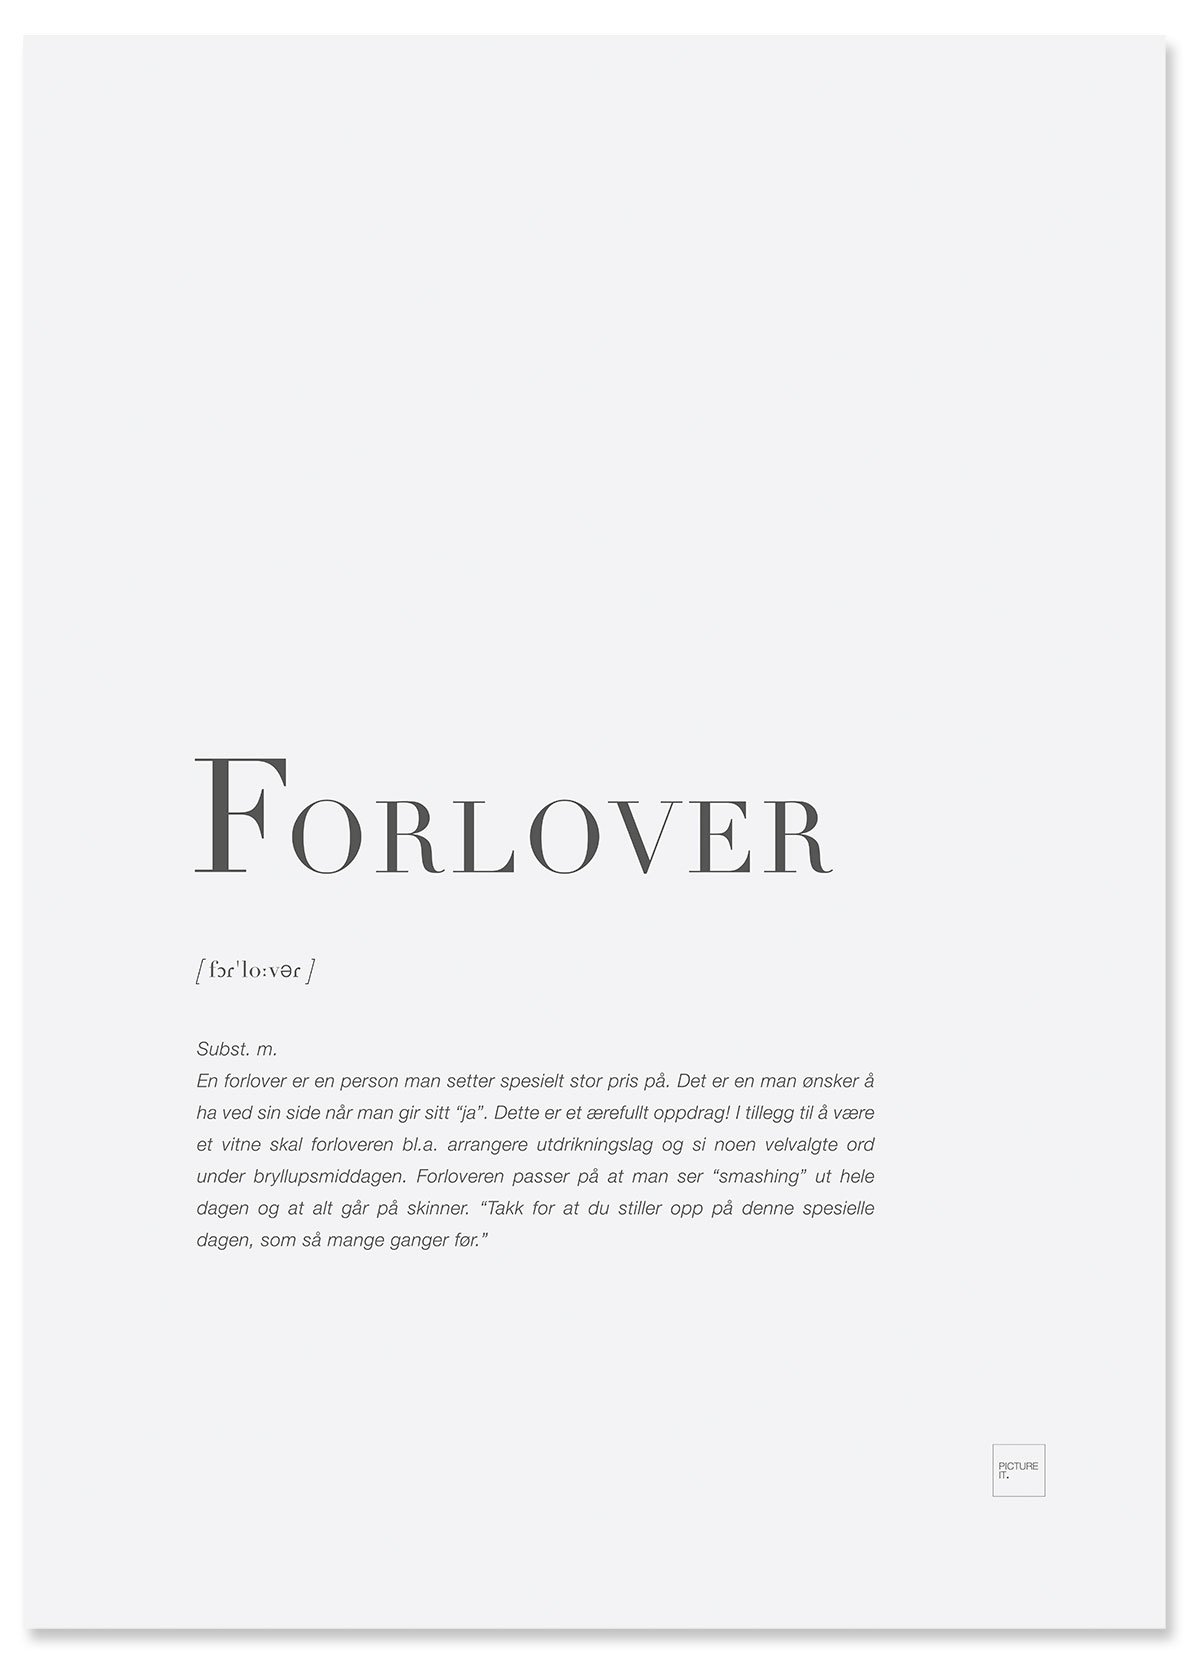 forlover-poster